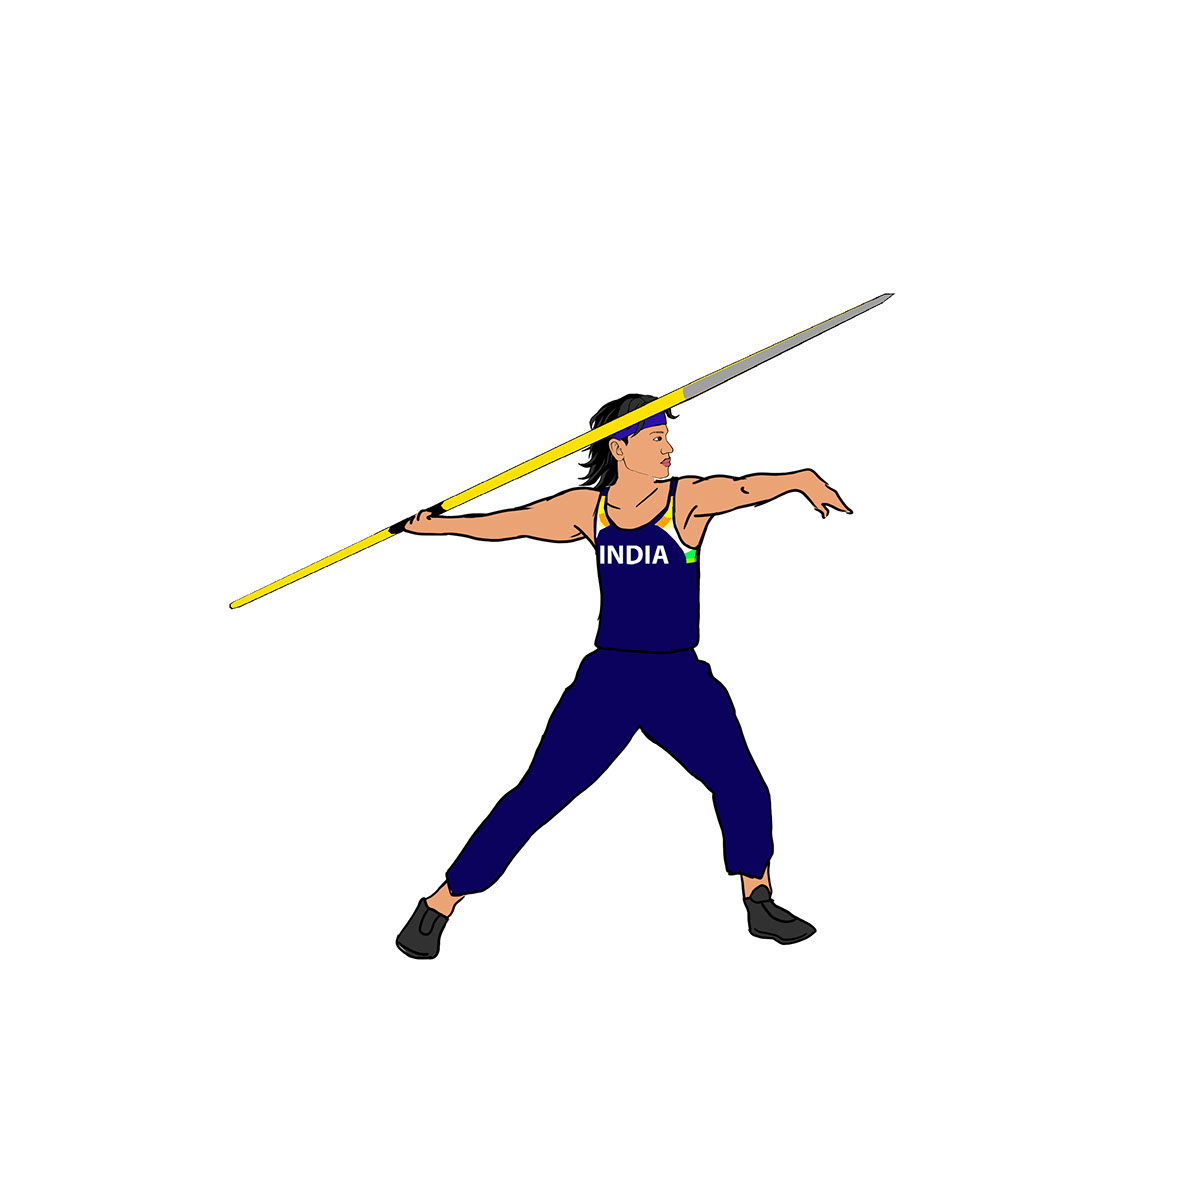 Javeline Throw rendition image